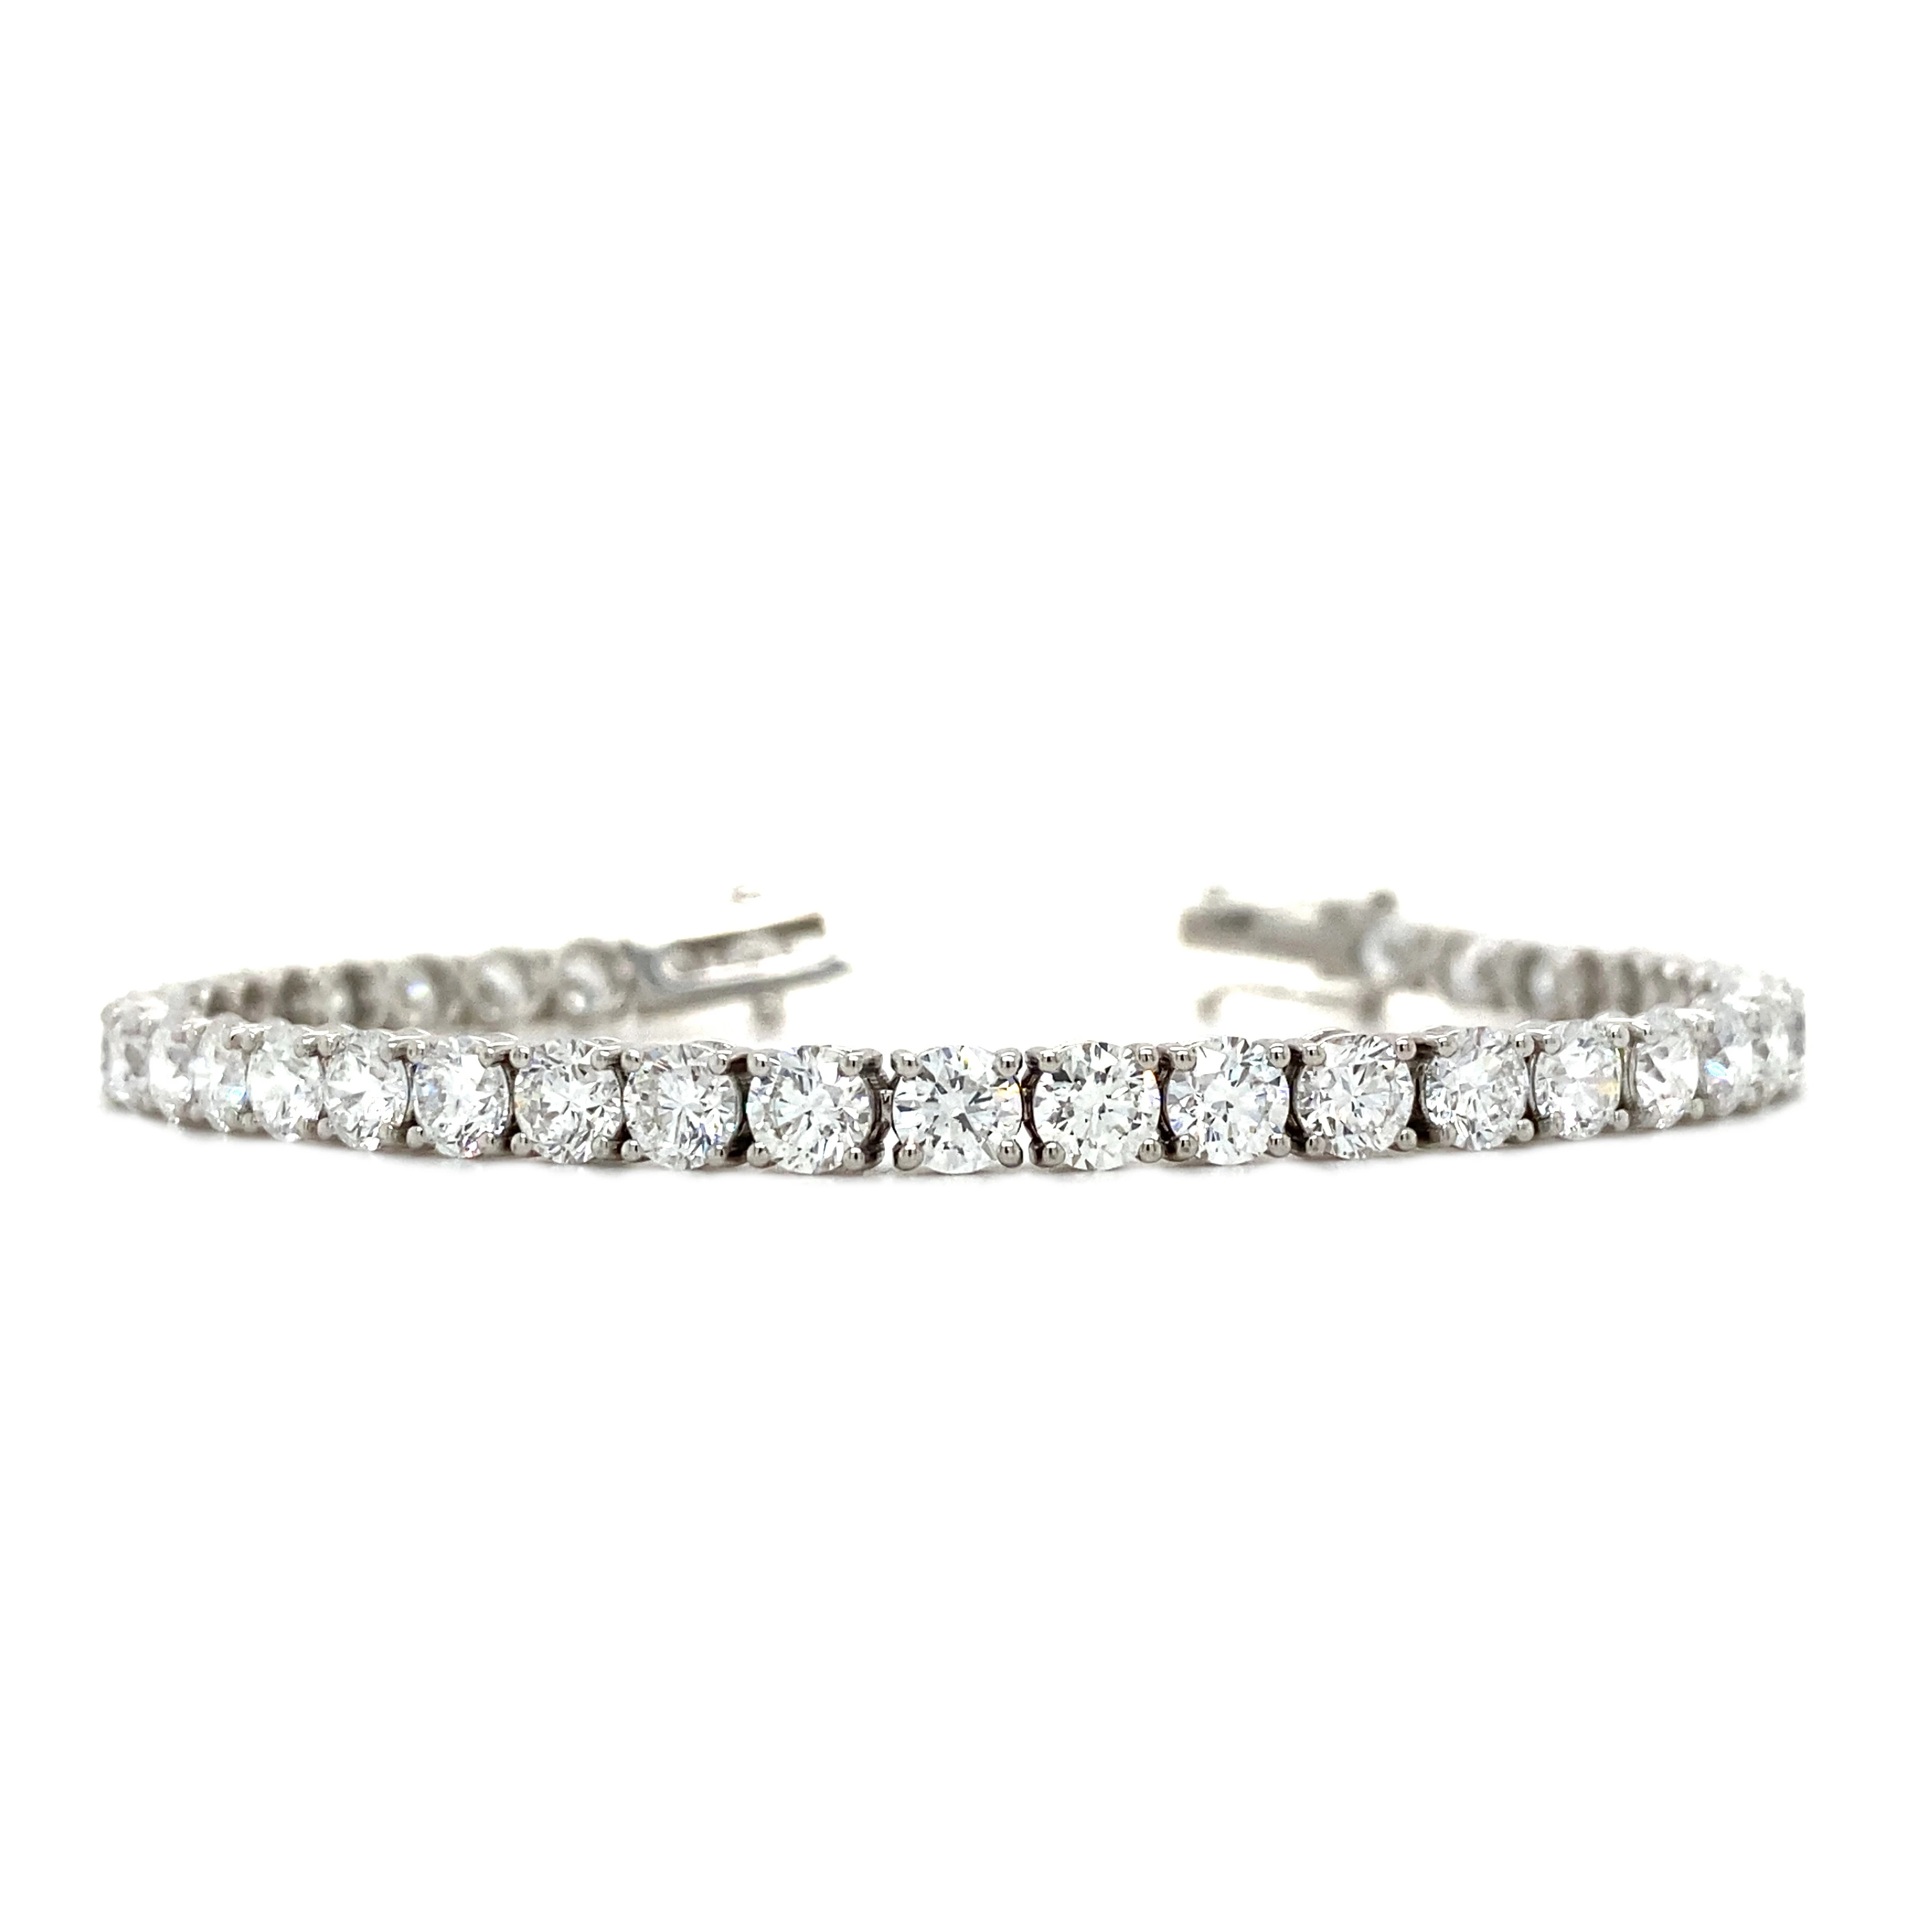 13.18 carat Lab Grown Diamond Tennis Bracelet